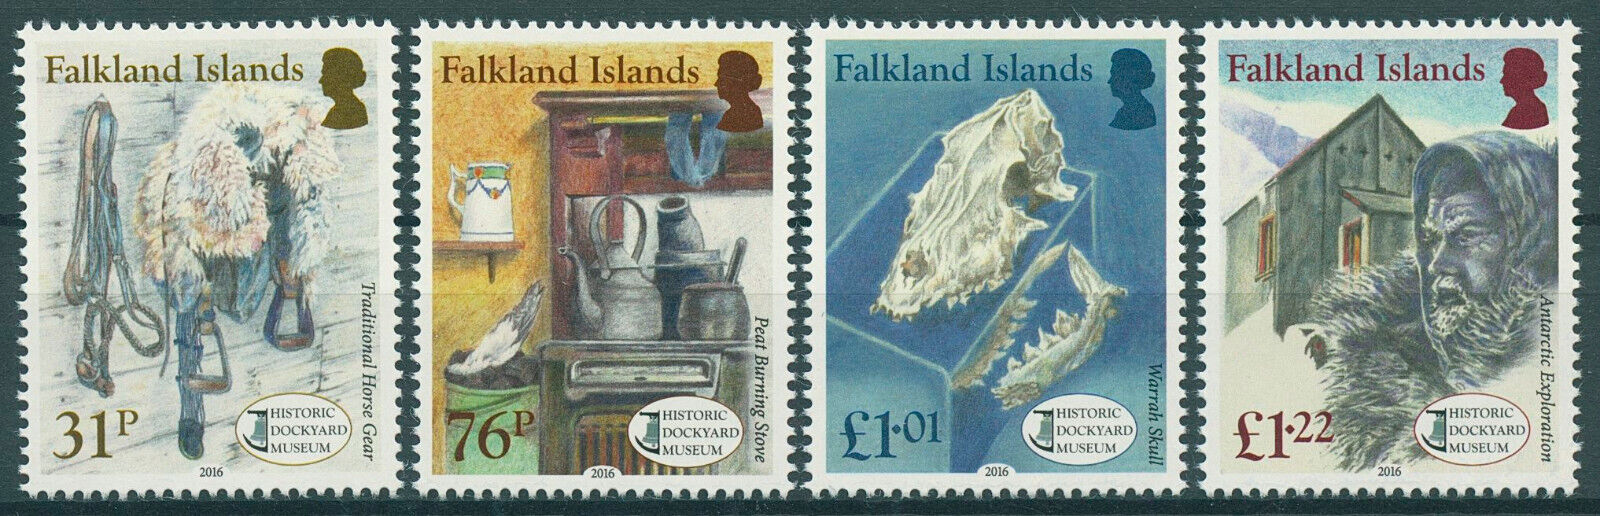 Falkland Islands 2016 MNH Exploration Stamps Historic Dockyard Museum 4v Set